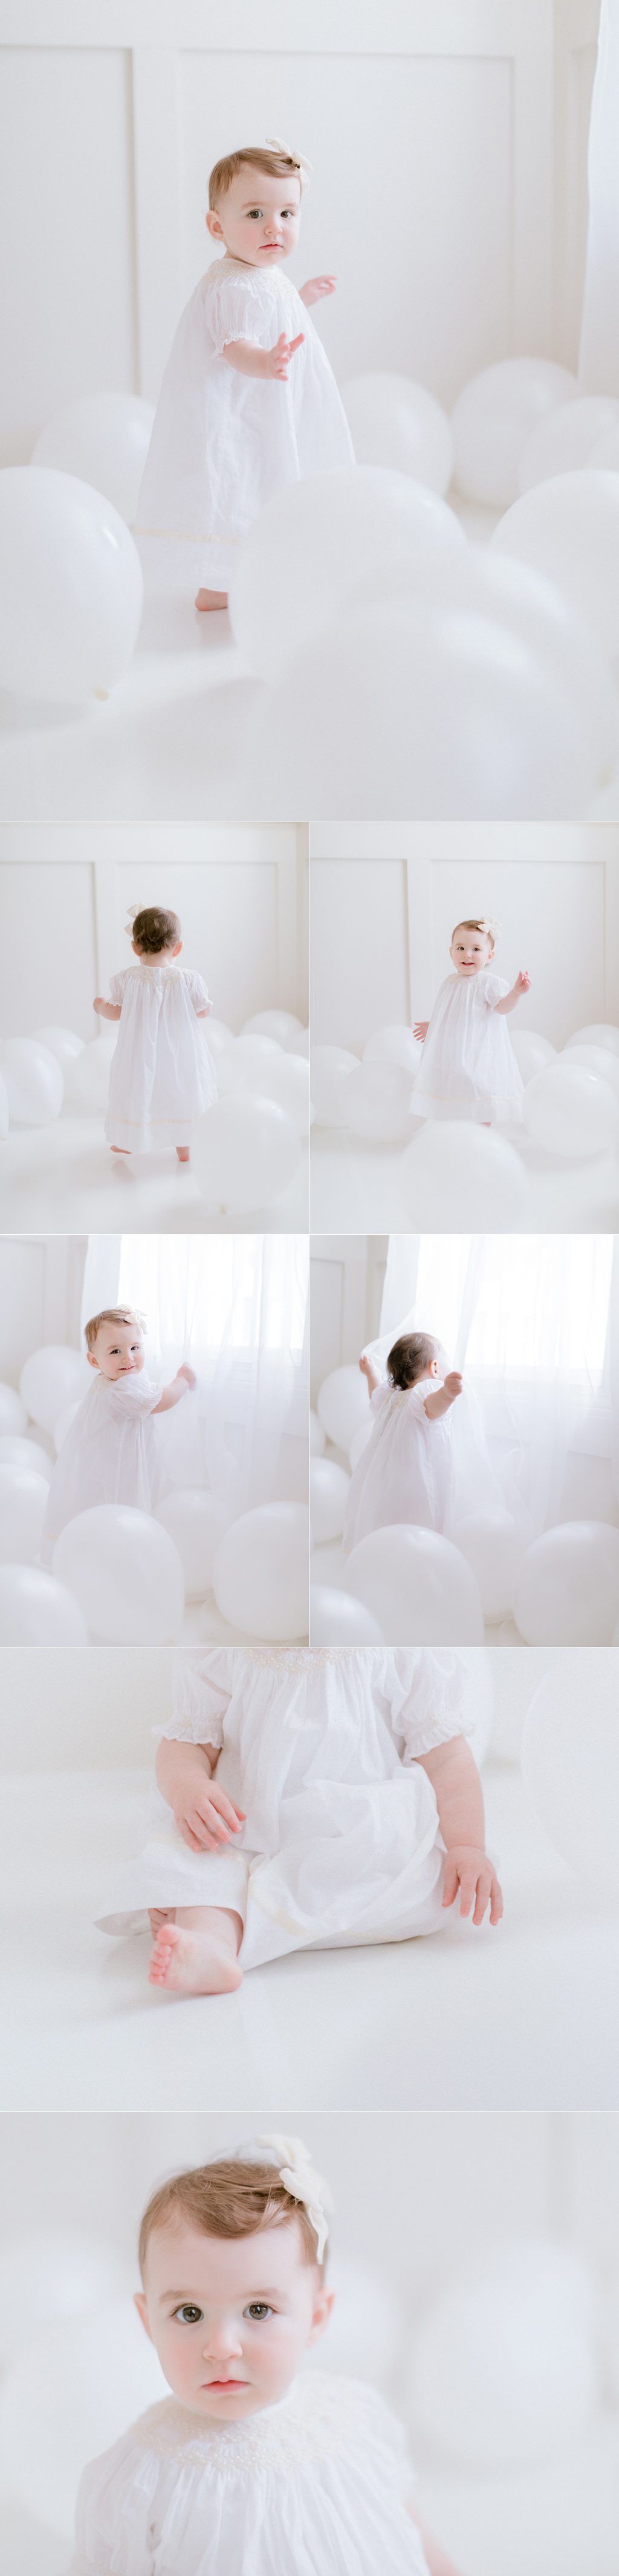 Baby's first birthday milestone photoshoot in Oconee County, GA with white balloons